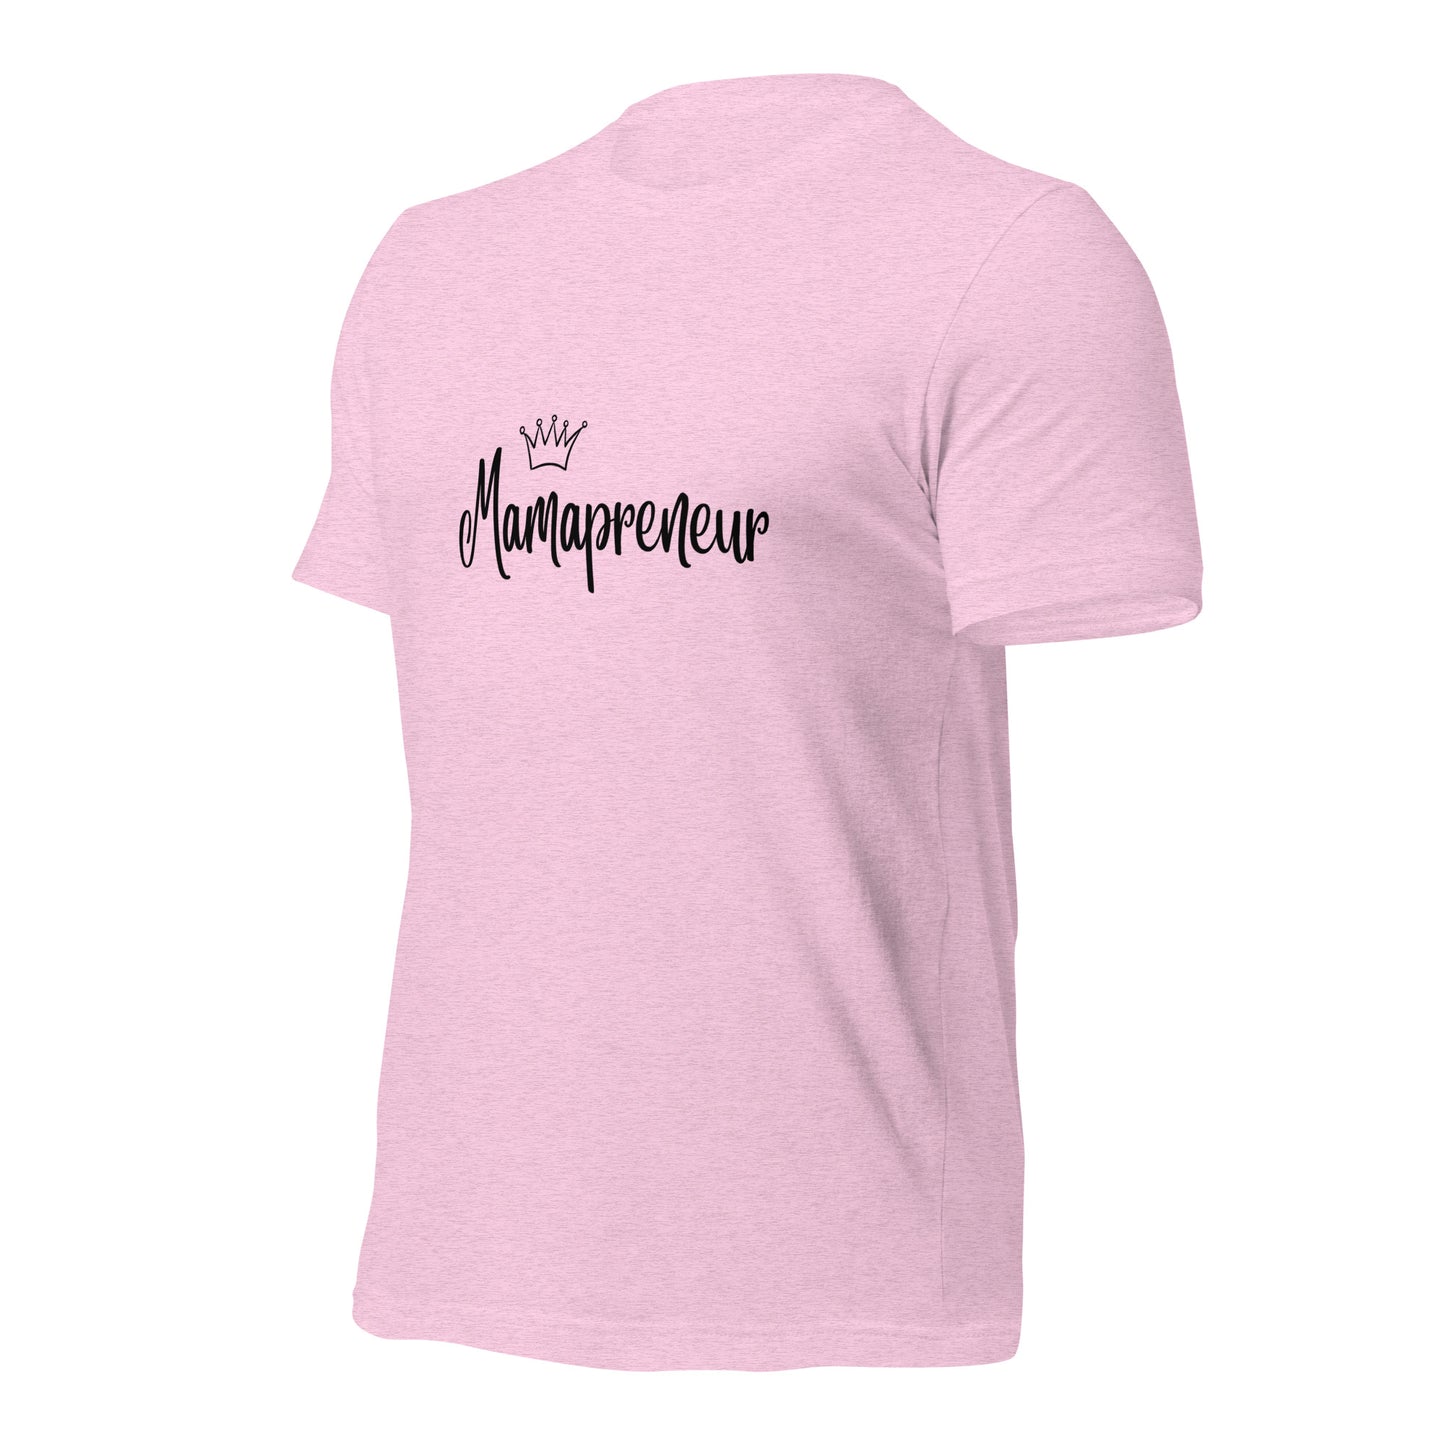 Mamapreneur - Soft Organic Cotton Tshirt for Women